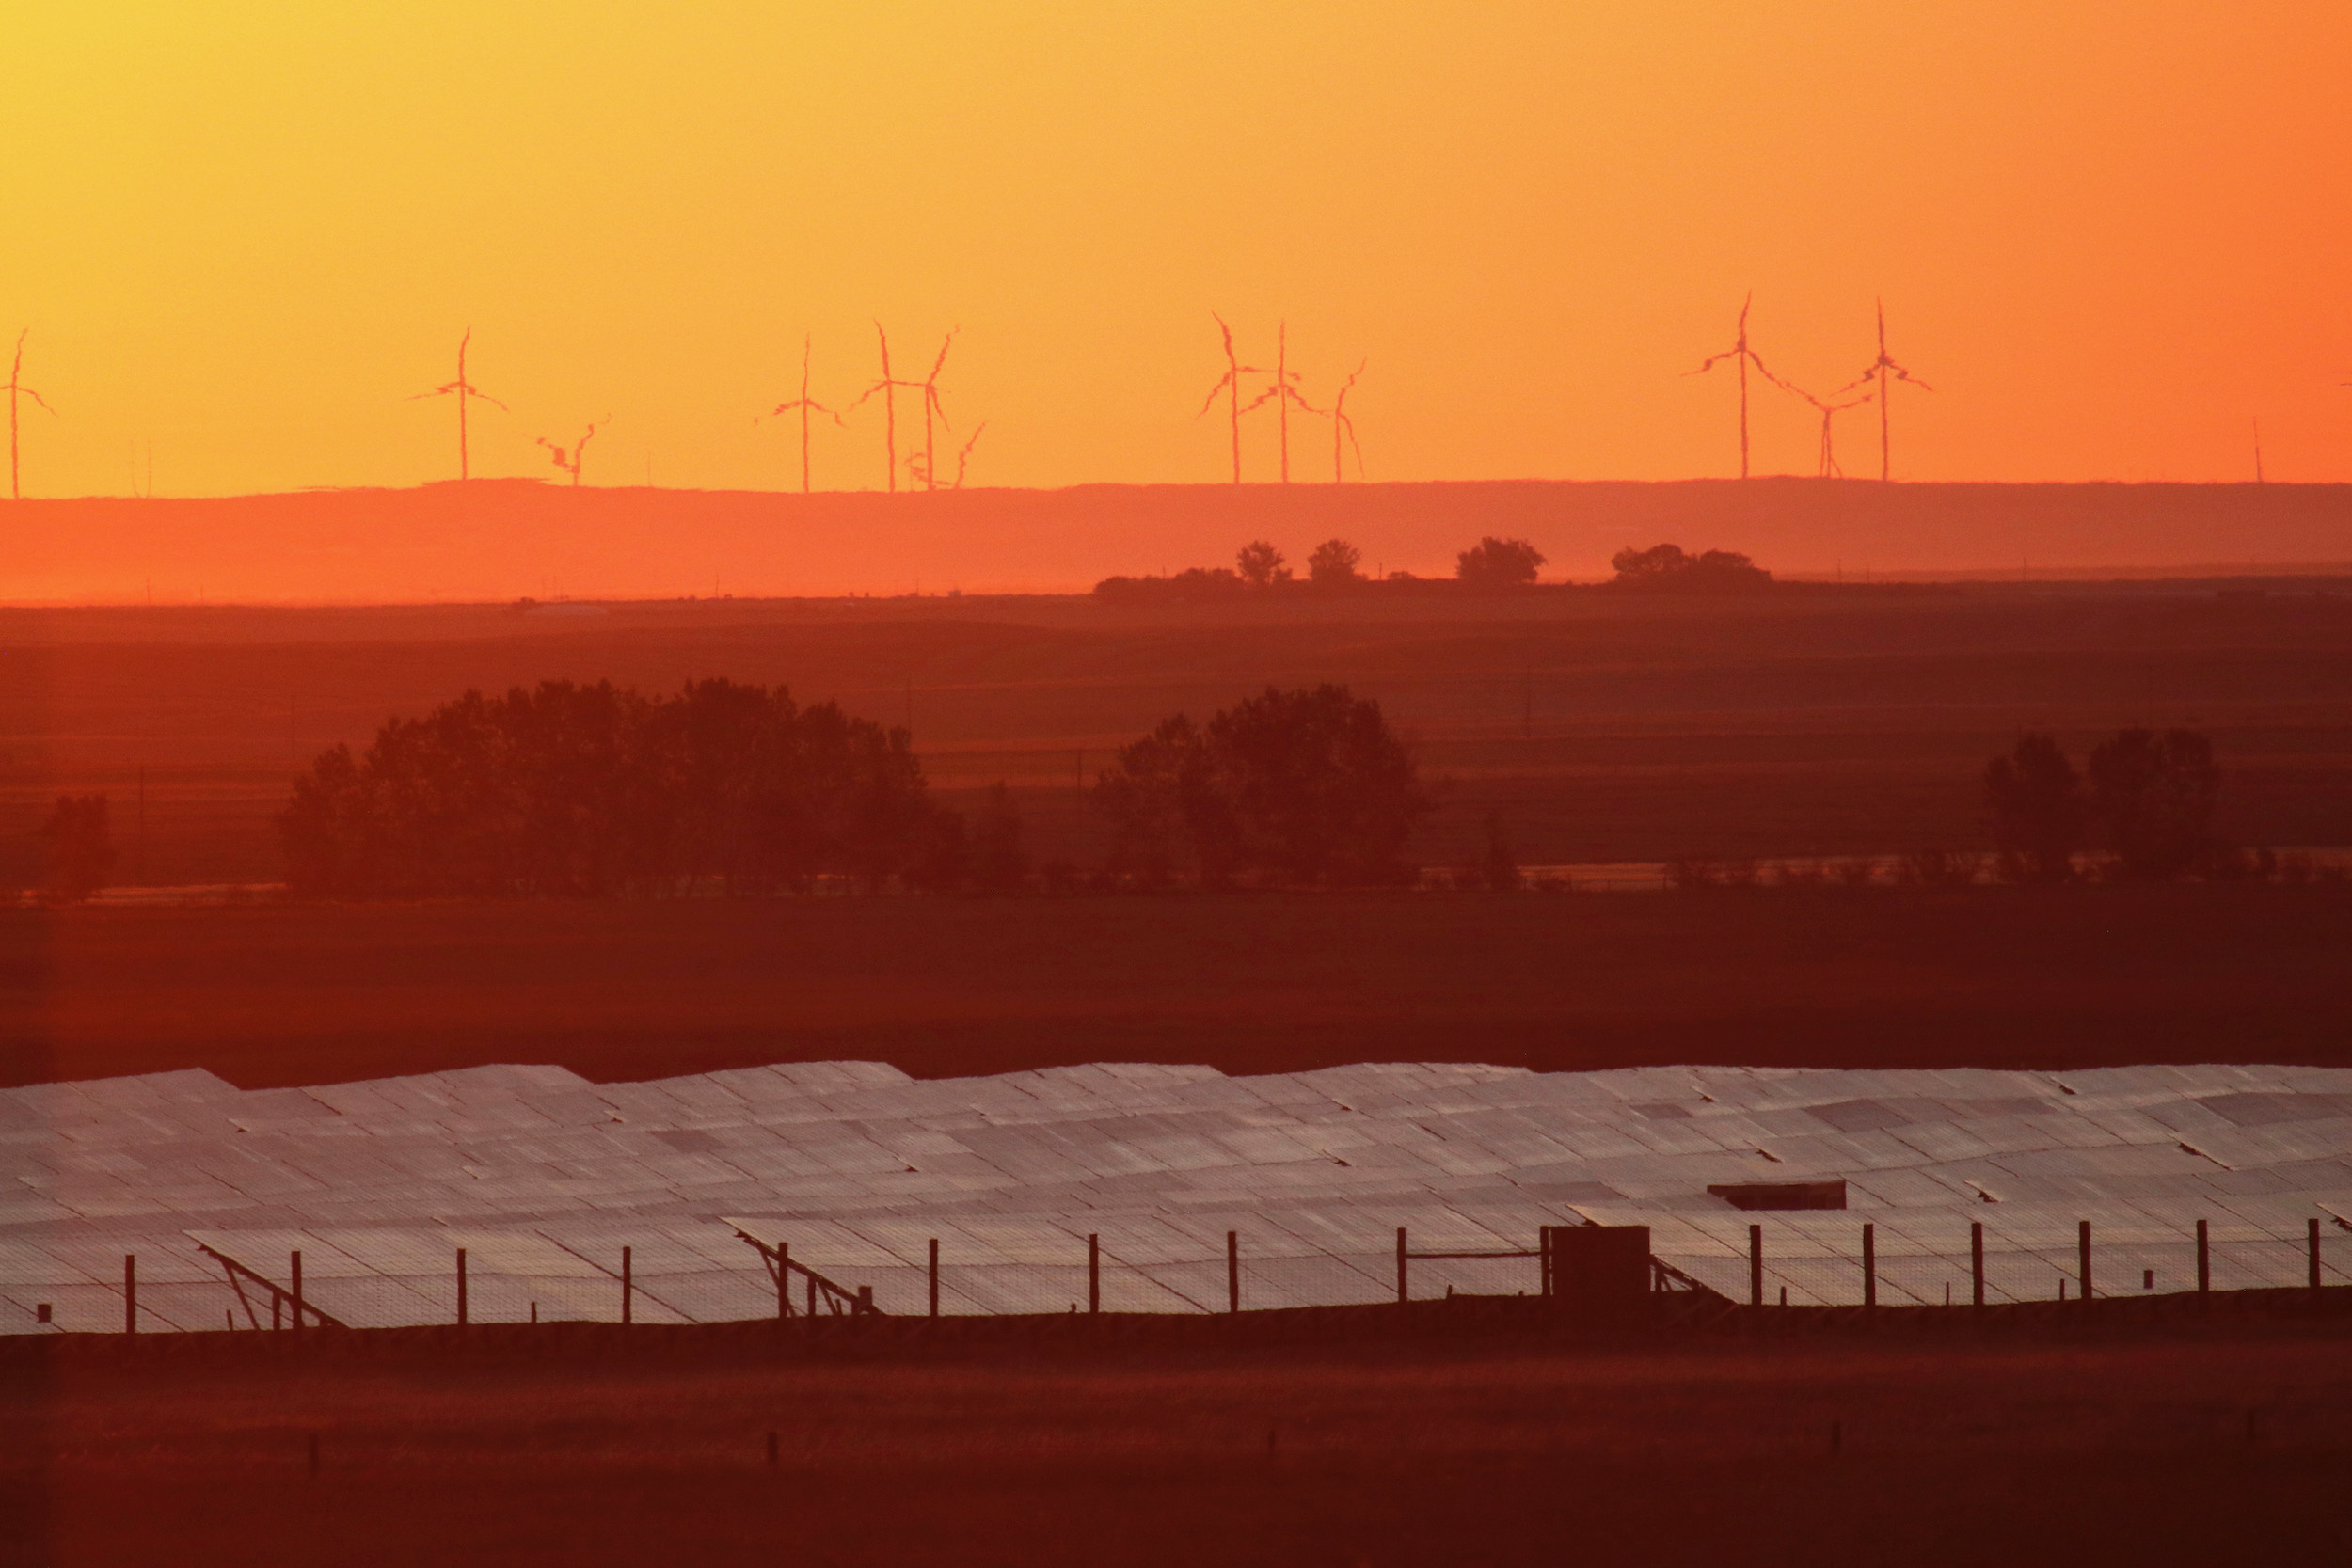 Solar and wind farms